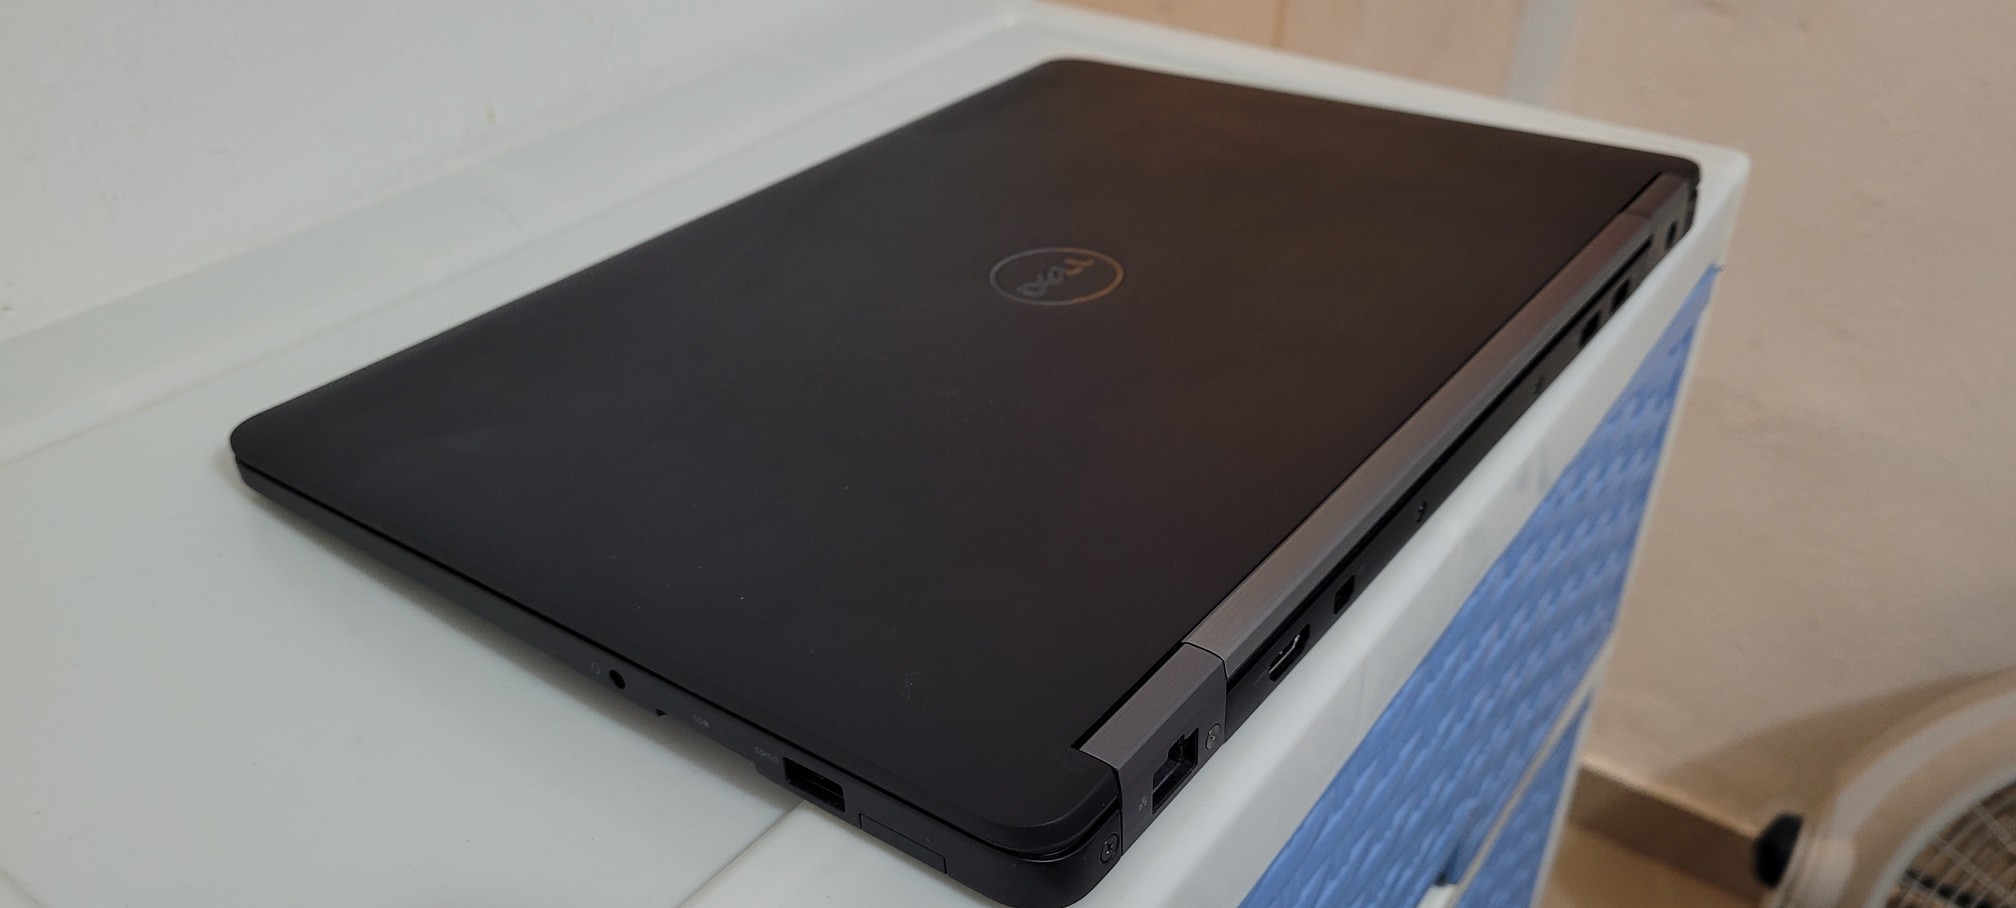 computadoras y laptops - Dell 7480 14 Pulg Core i7 7ma Ram 8gb Disco 128gb SSD Full 1080p 2